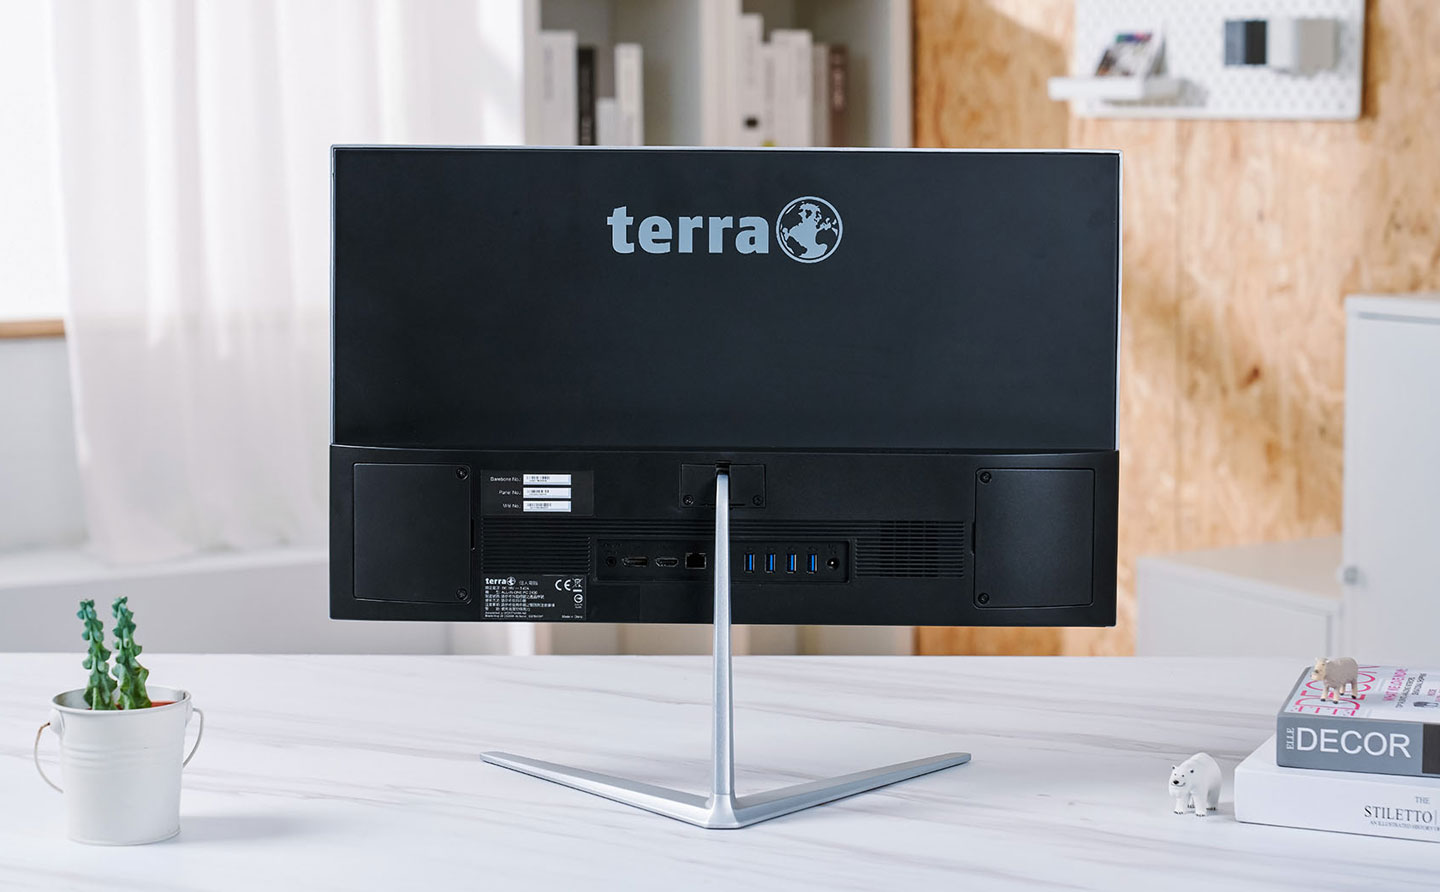 TERterra AIO 2400 的連結埠與擴充口皆佈局於機身後側。 ▲ 靠近支架左側可看到 3.5 mm 的耳機 / 麥克風二合一接口、DisplayPort 埠、HDMI 埠與 2.5 GbE 規格的 RJ-45 接口。 ▲ 靠近支架右側配置了 4 組 USB 3.2 Gen2 A 埠，相較於一般常見的 Gen1 規格傳輸速度是 2 倍的 10 Gbps，另外也有電源供應器接口。